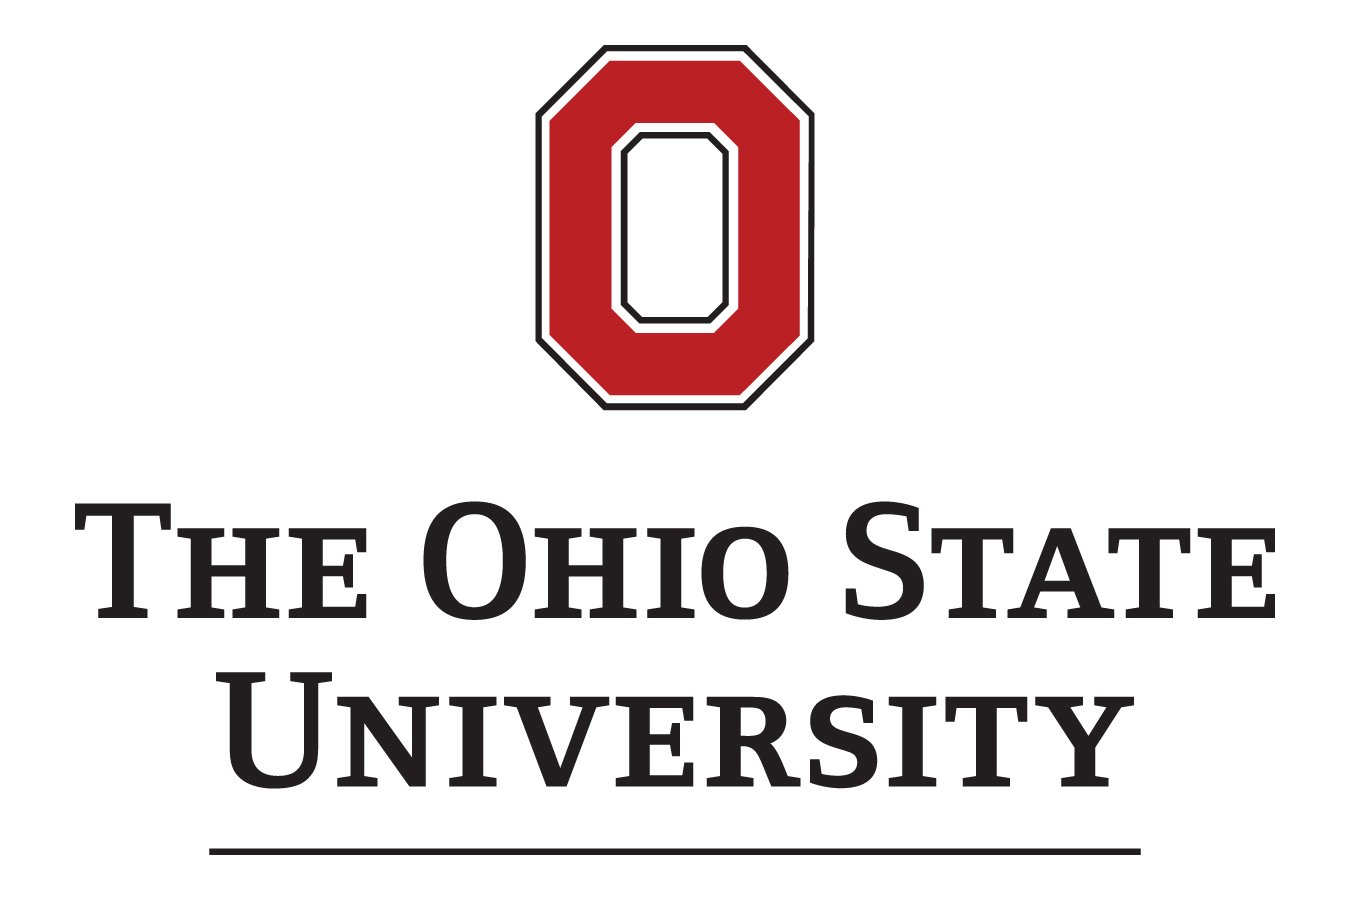 https://images.squarespace-cdn.com/content/v1/623126b50d2dfb281caaafd3/29f801c9-e057-4041-831f-4729e98e598c/The-Ohio-State-University-logo.jpg